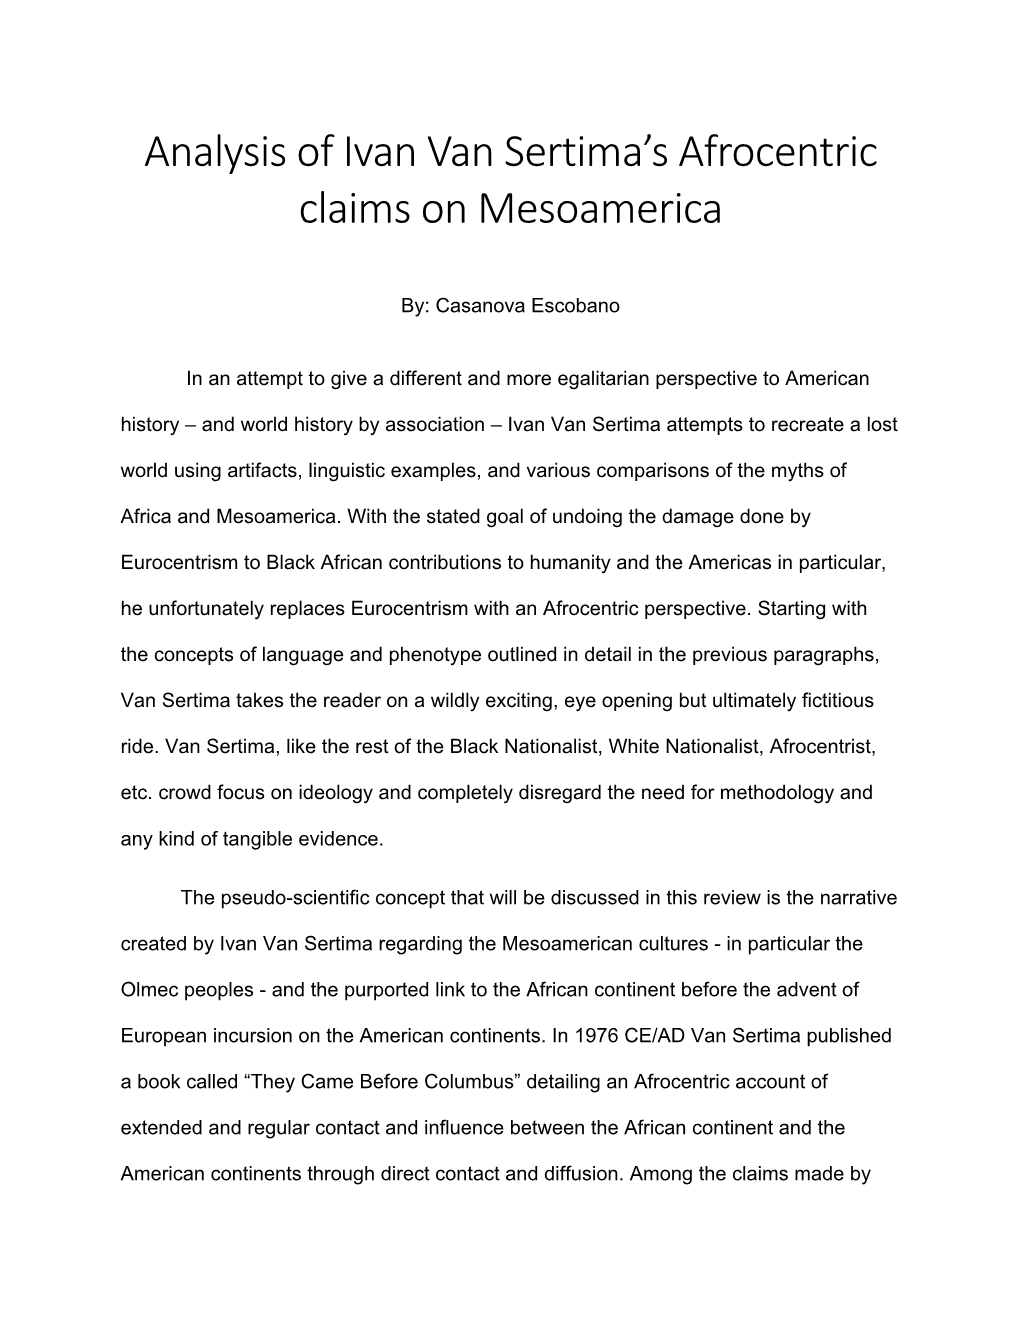 Analysis of Ivan Van Sertima's Afrocentric Claims on Mesoamerica